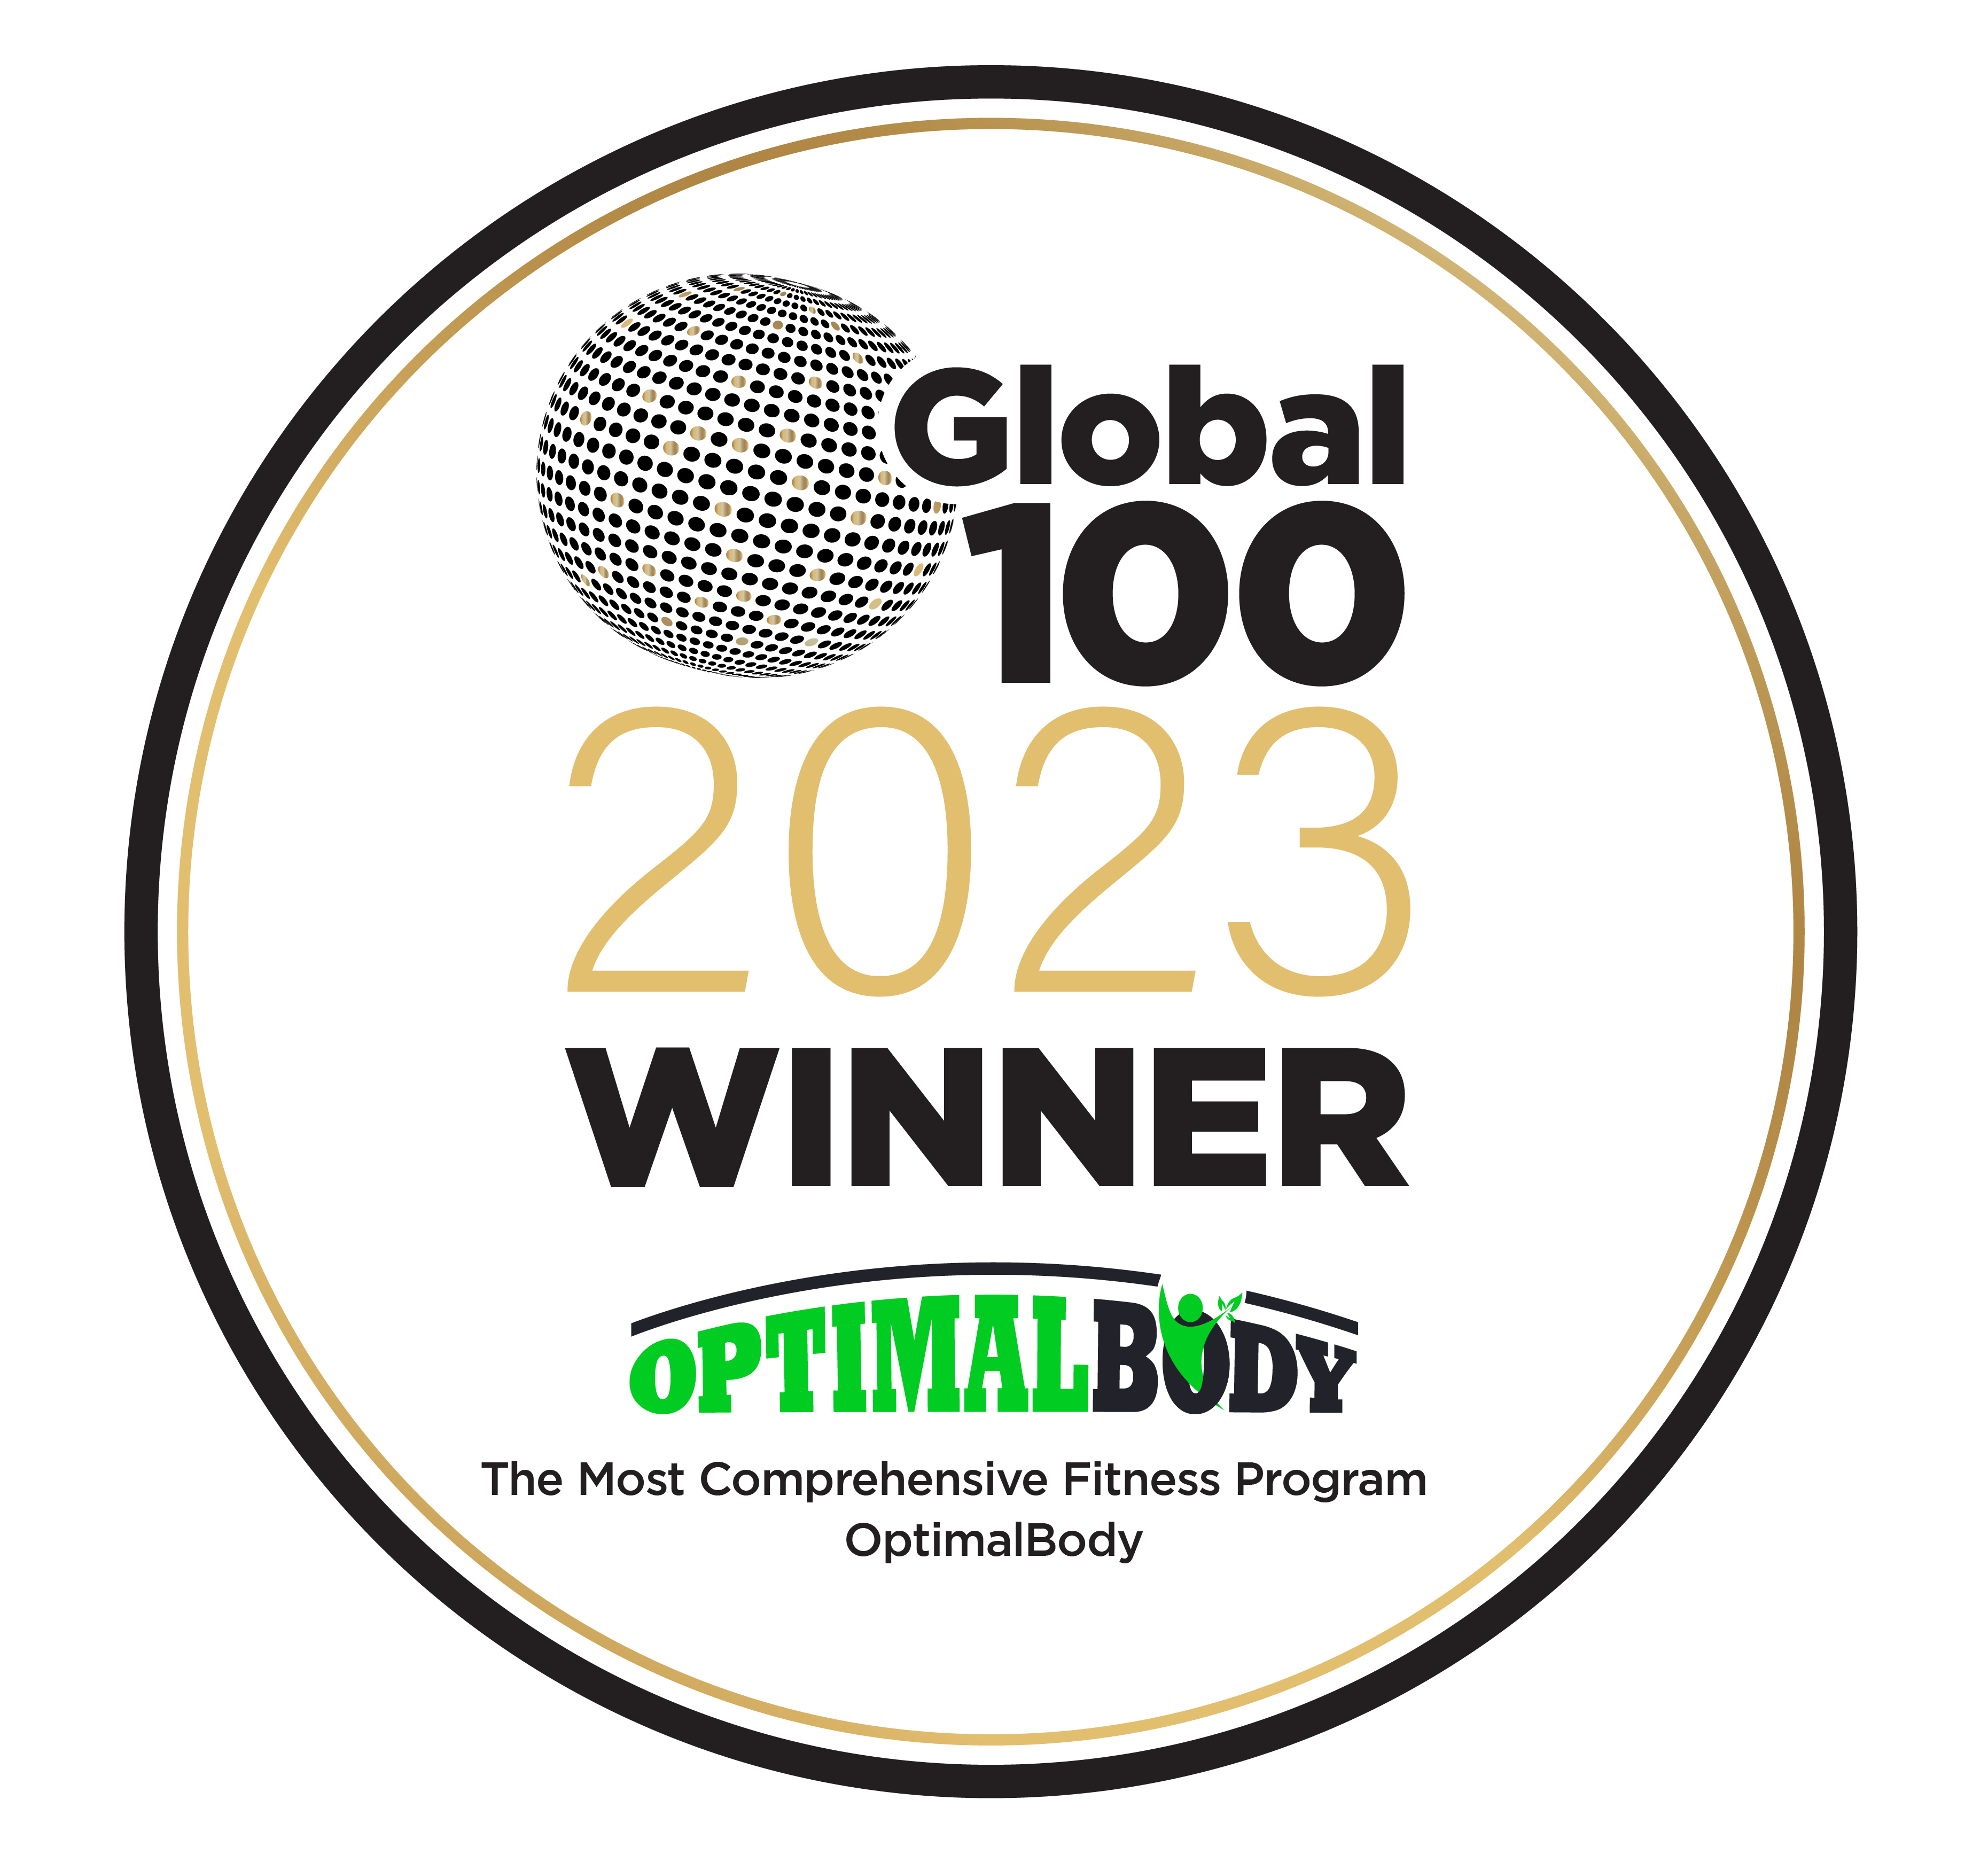 OptimalBody Global 100 Winner